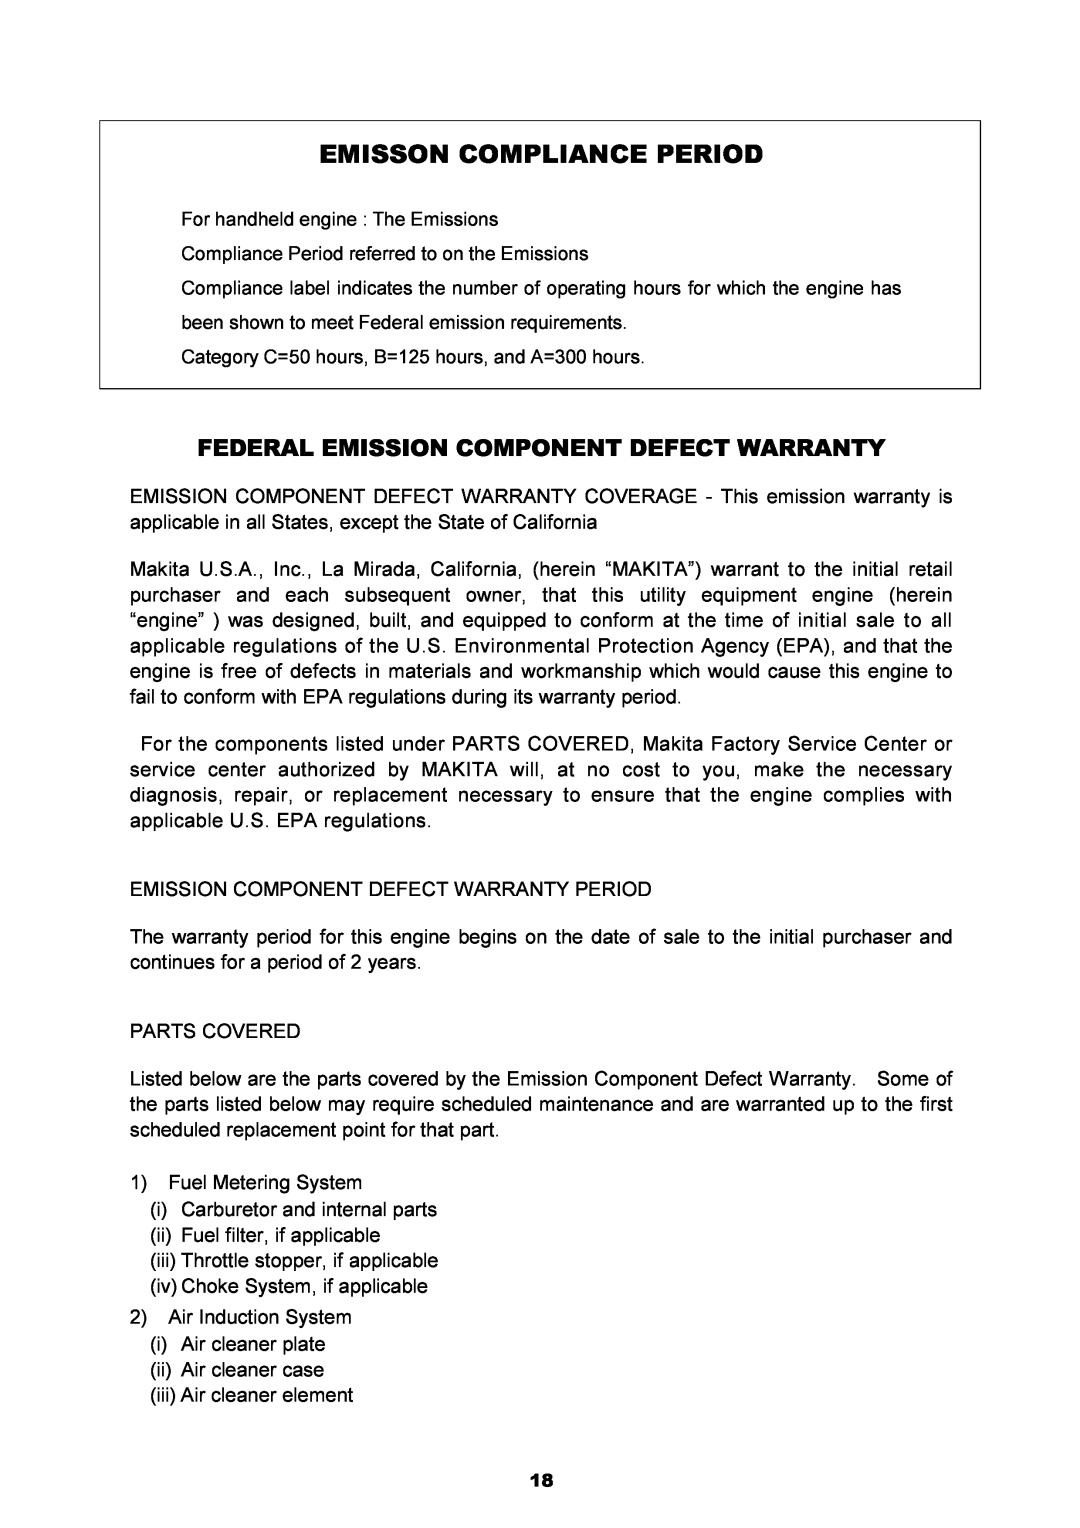 Dolmar MH-2556 instruction manual Emisson Compliance Period, Federal Emission Component Defect Warranty 